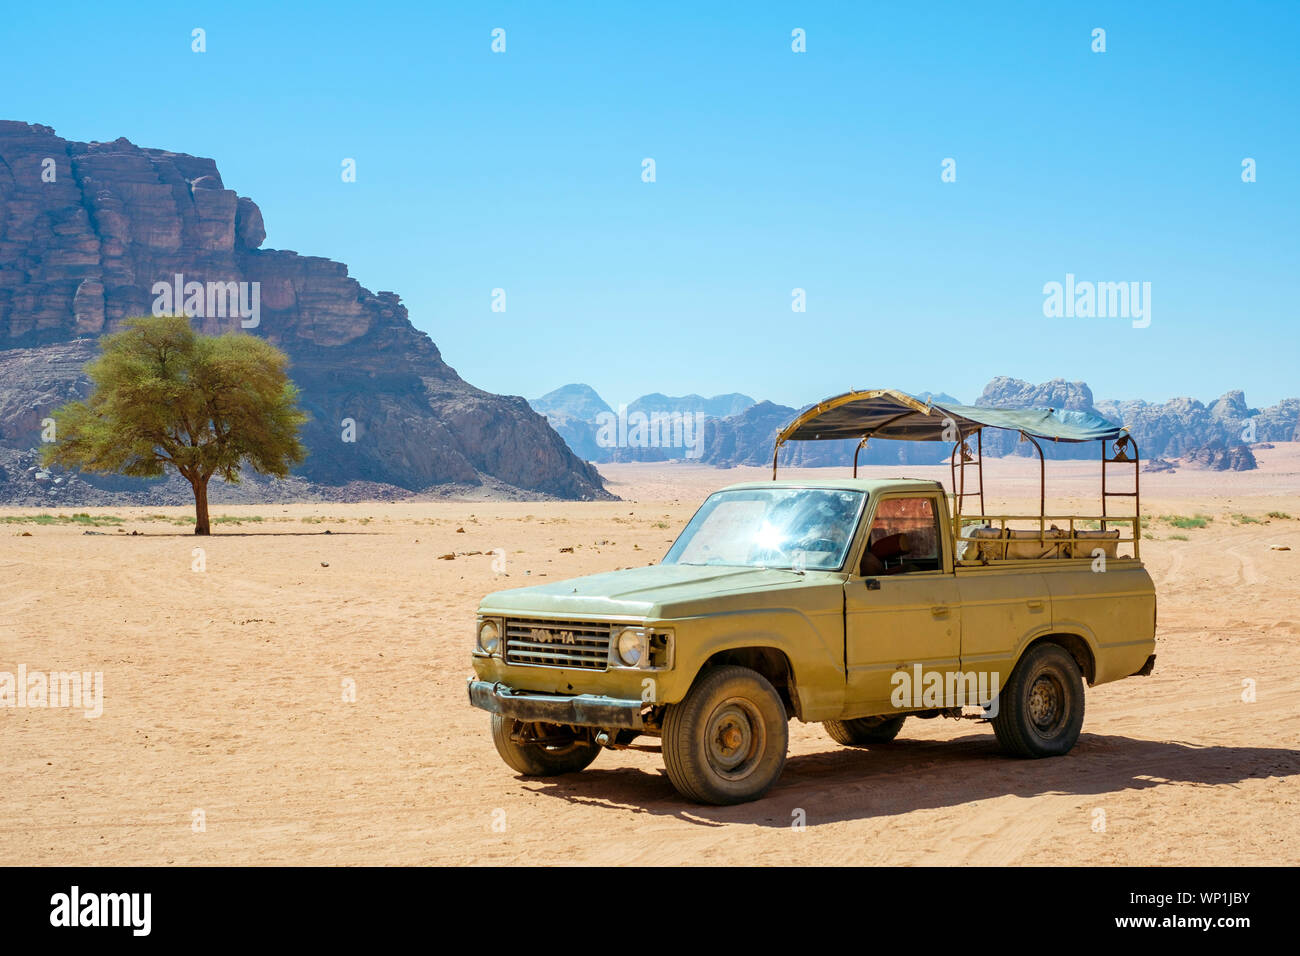 Jordan, Aqaba Governorate, Wadi Rum. Wadi Rum Protected Area, UNESCO World Heritage Site. Four wheel drive truck belonging to local bedouin guide. Stock Photo